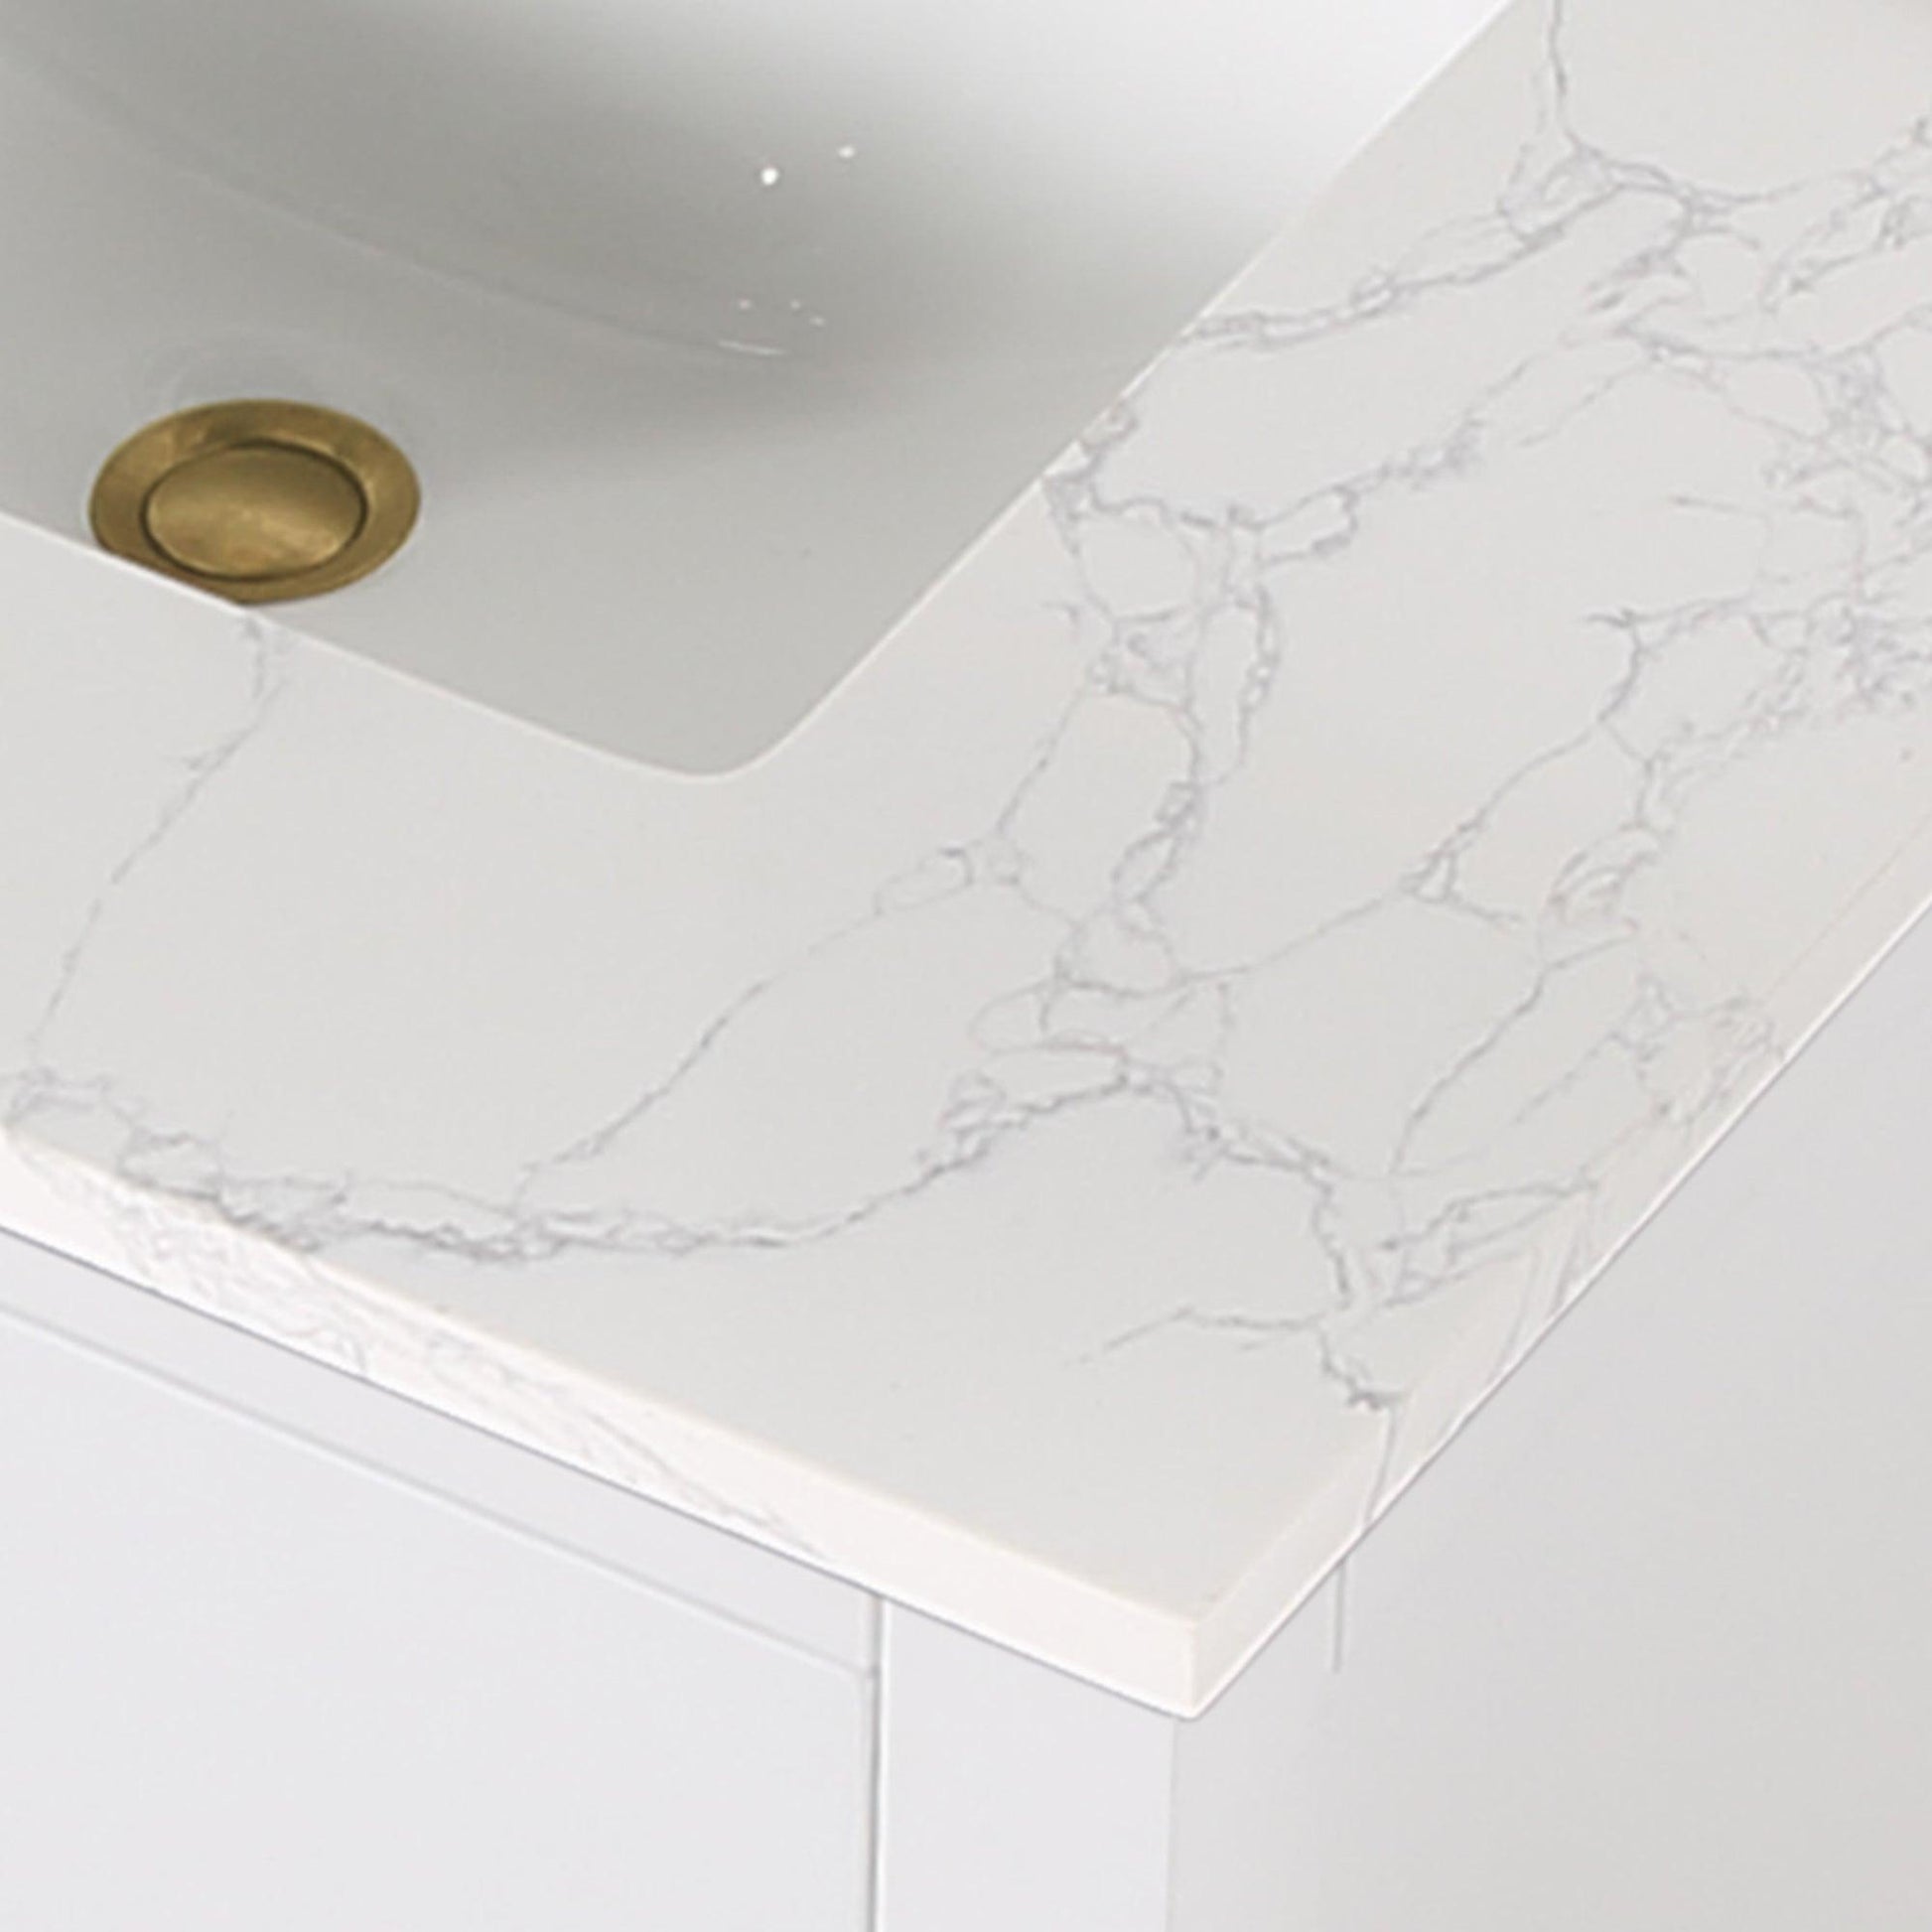 Altair Gavino Single Bathroom Vanity with Grain White Composite Stone Countertop and Optional Mirror - Sea & Stone Bath